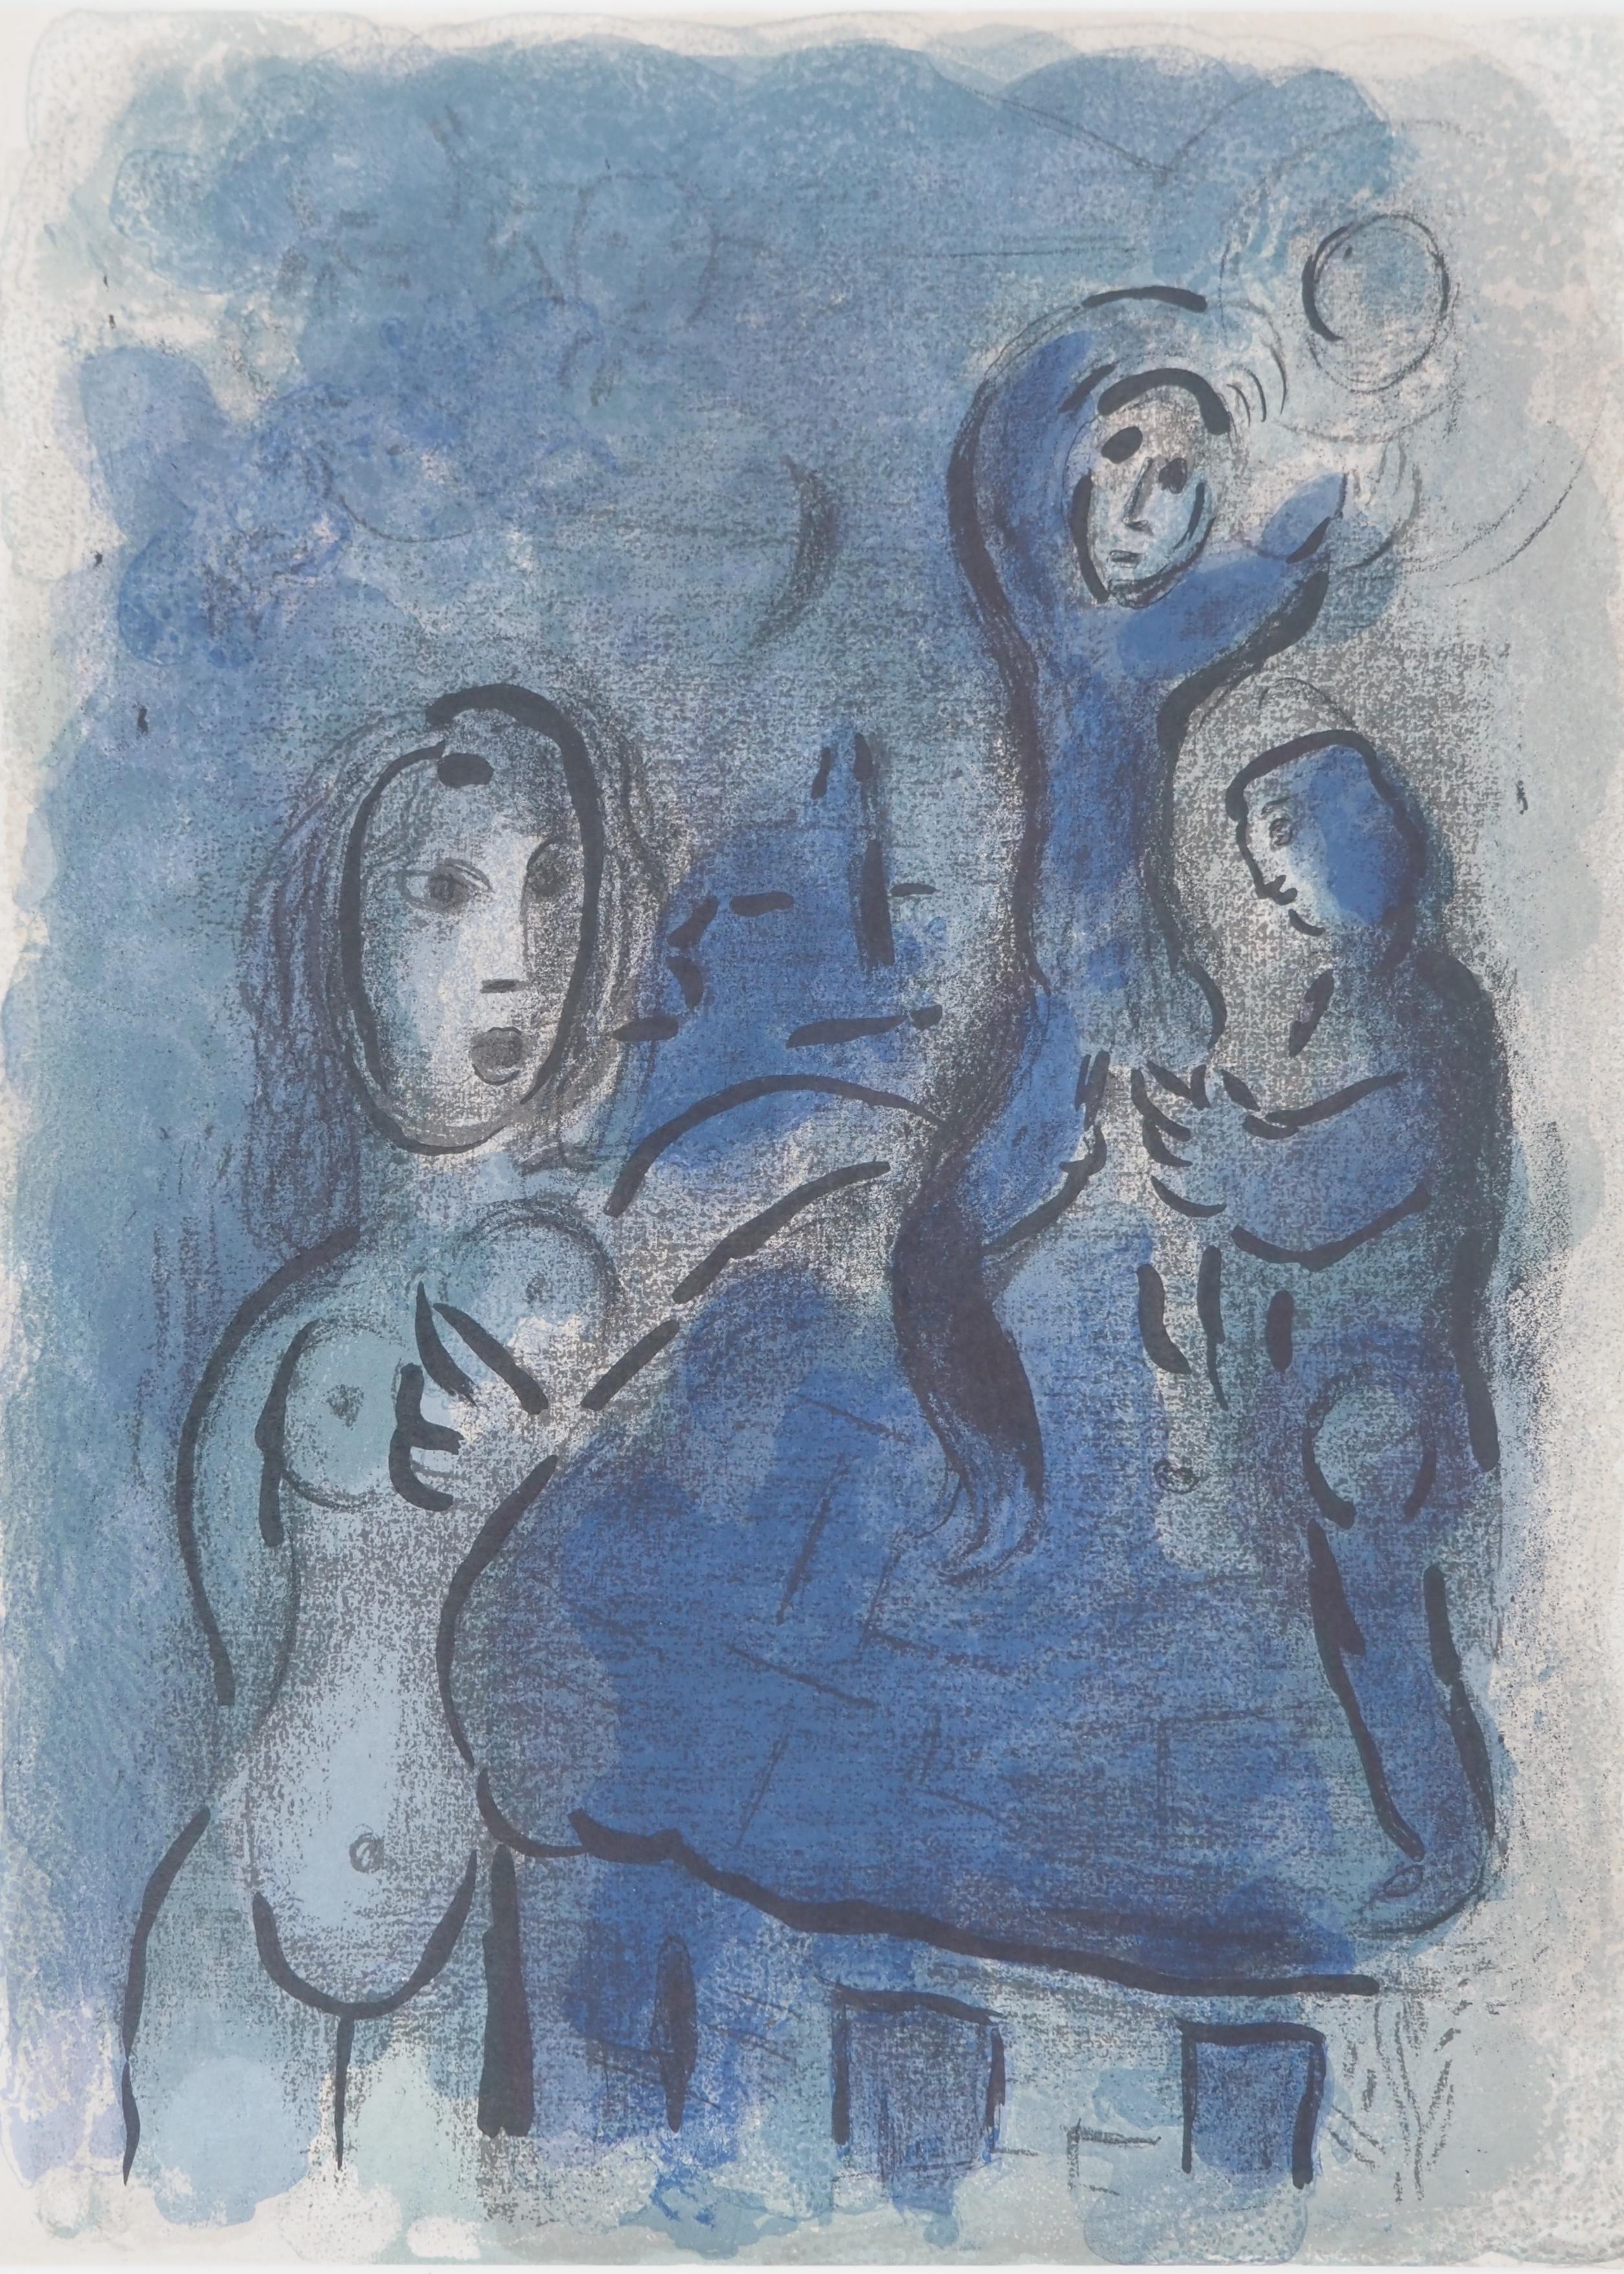 How do I pronounce Marc Chagall?